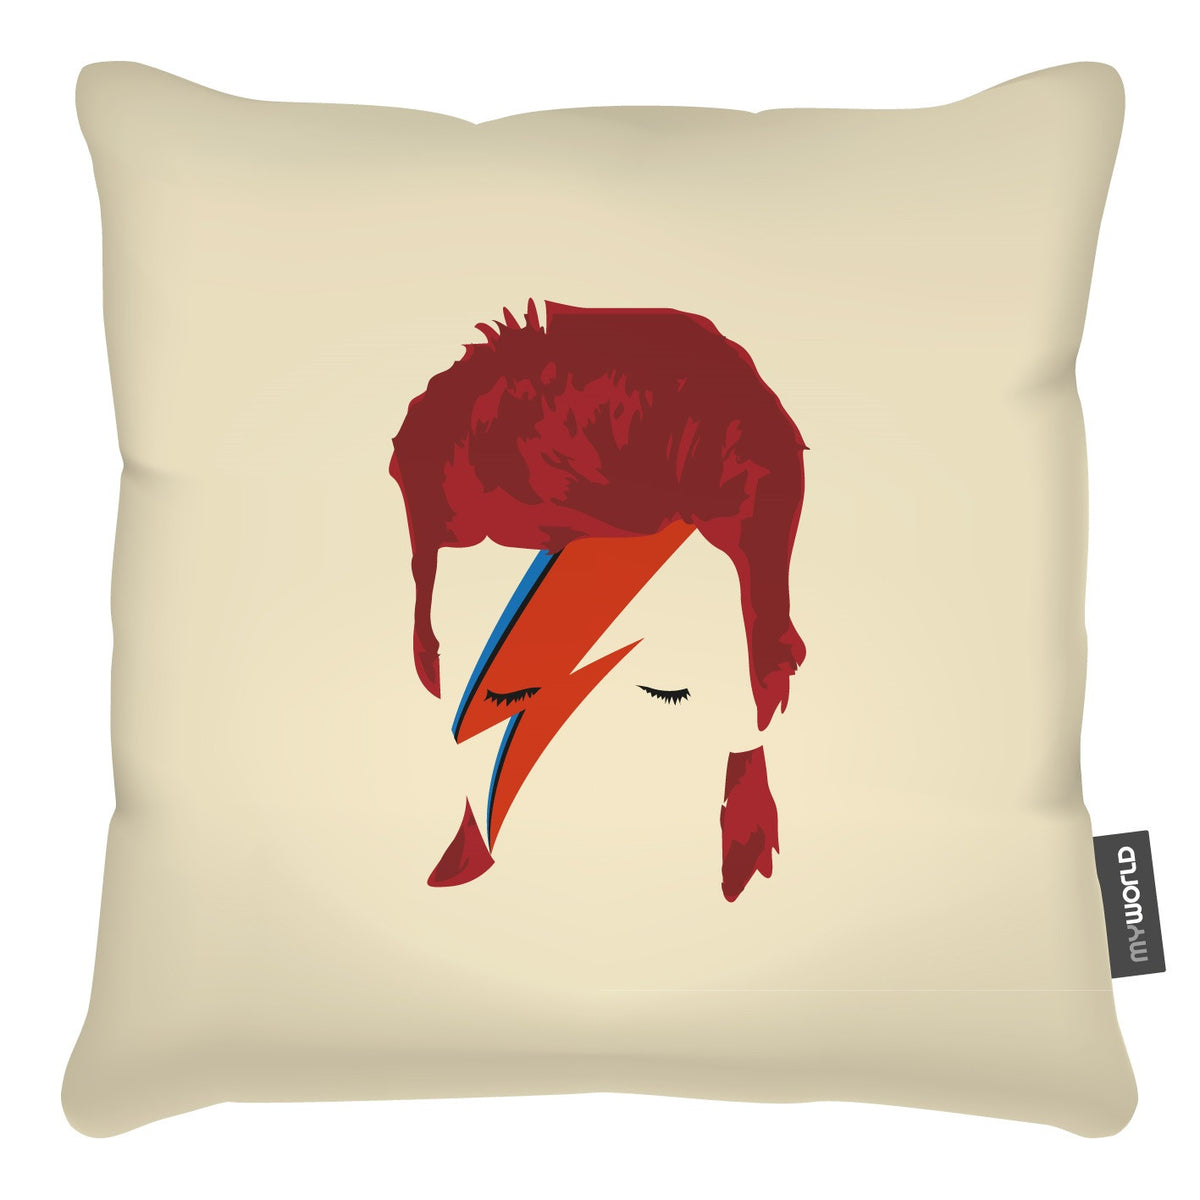 David Bowie Cushion